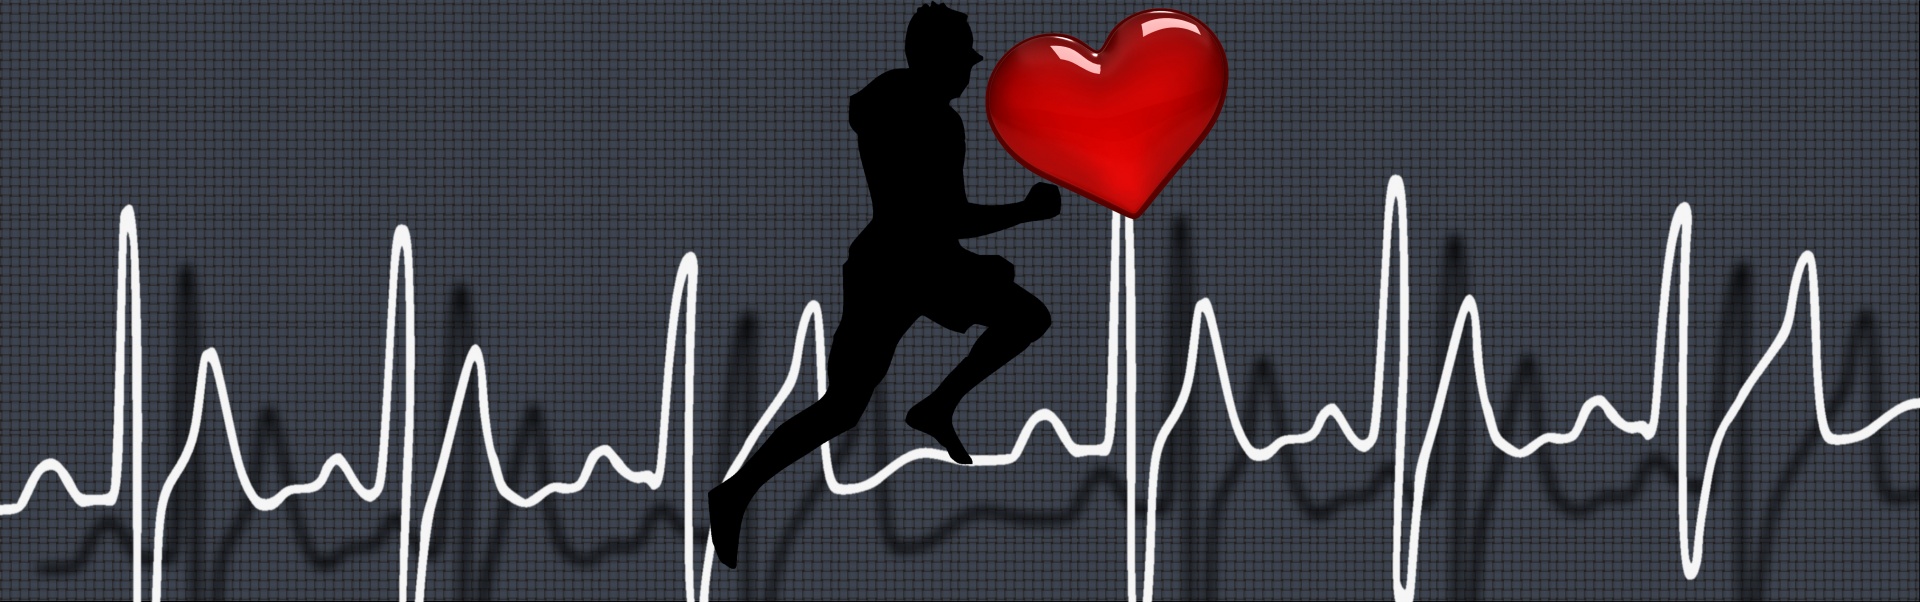 health pulse heart rate free photo